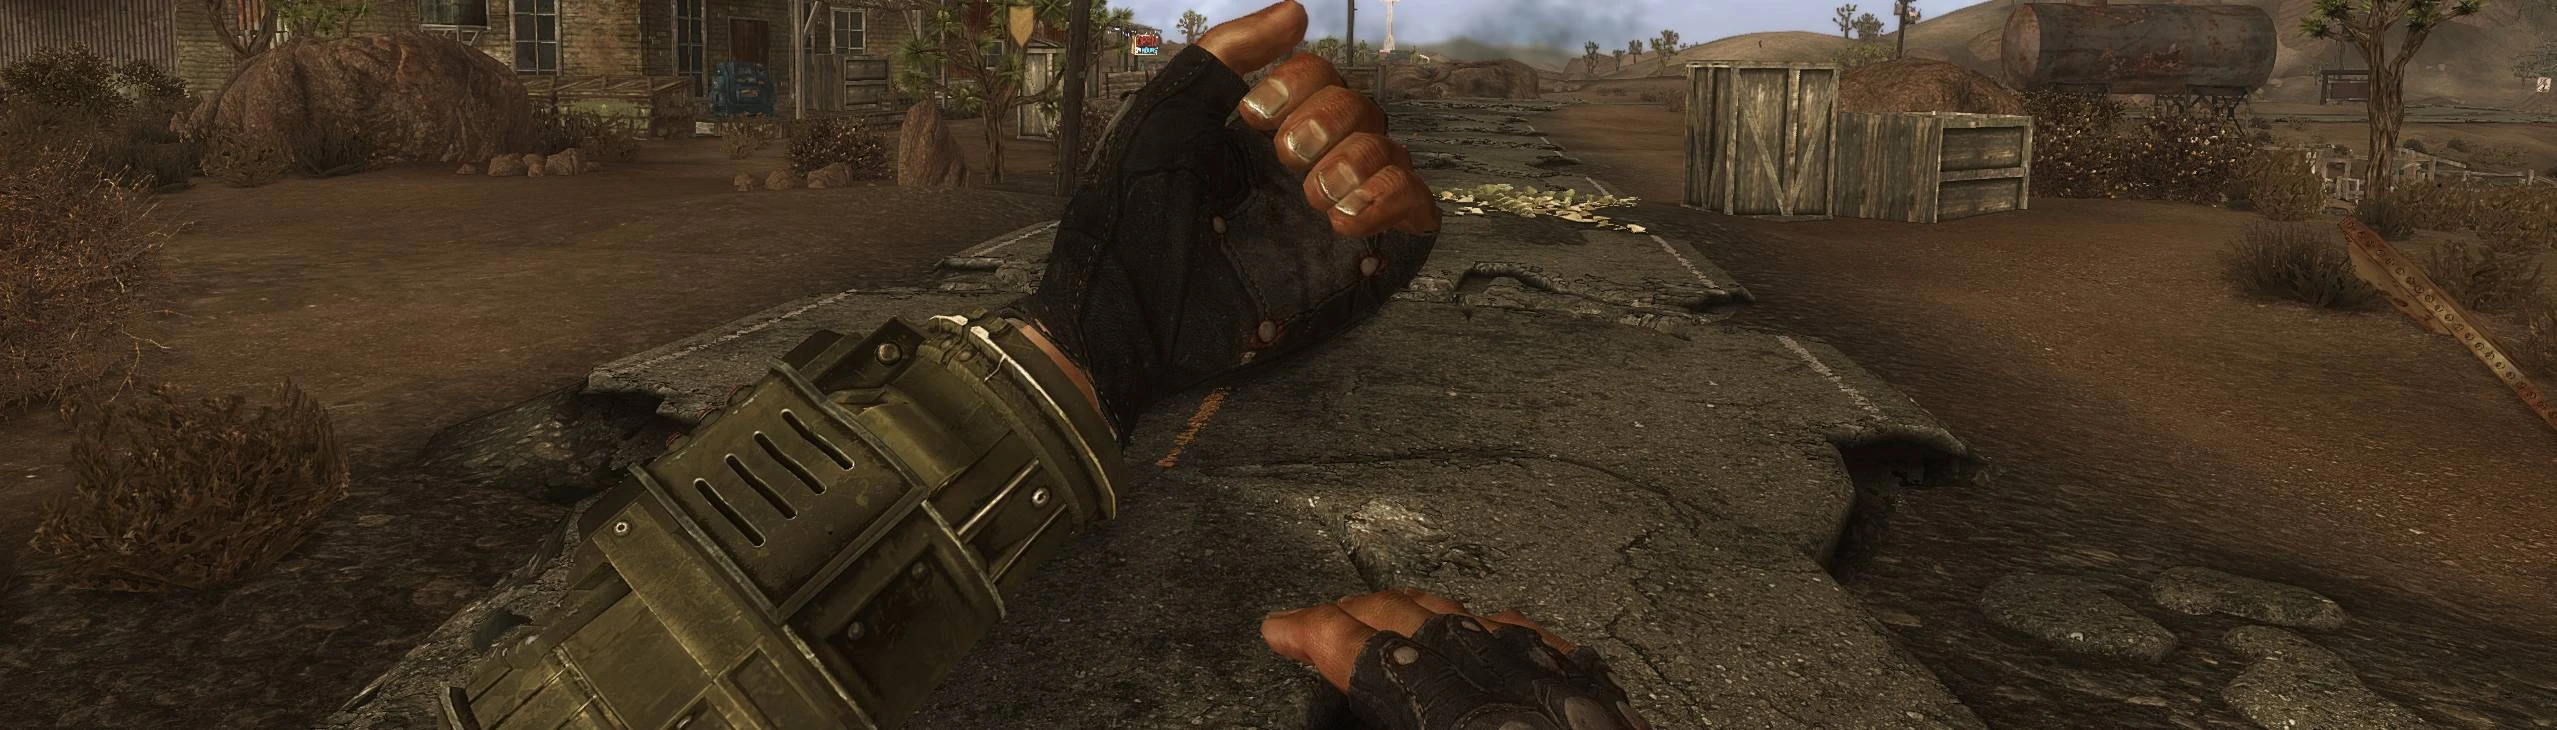 Fallout New Vegas Mods: Fiver - Part 1 